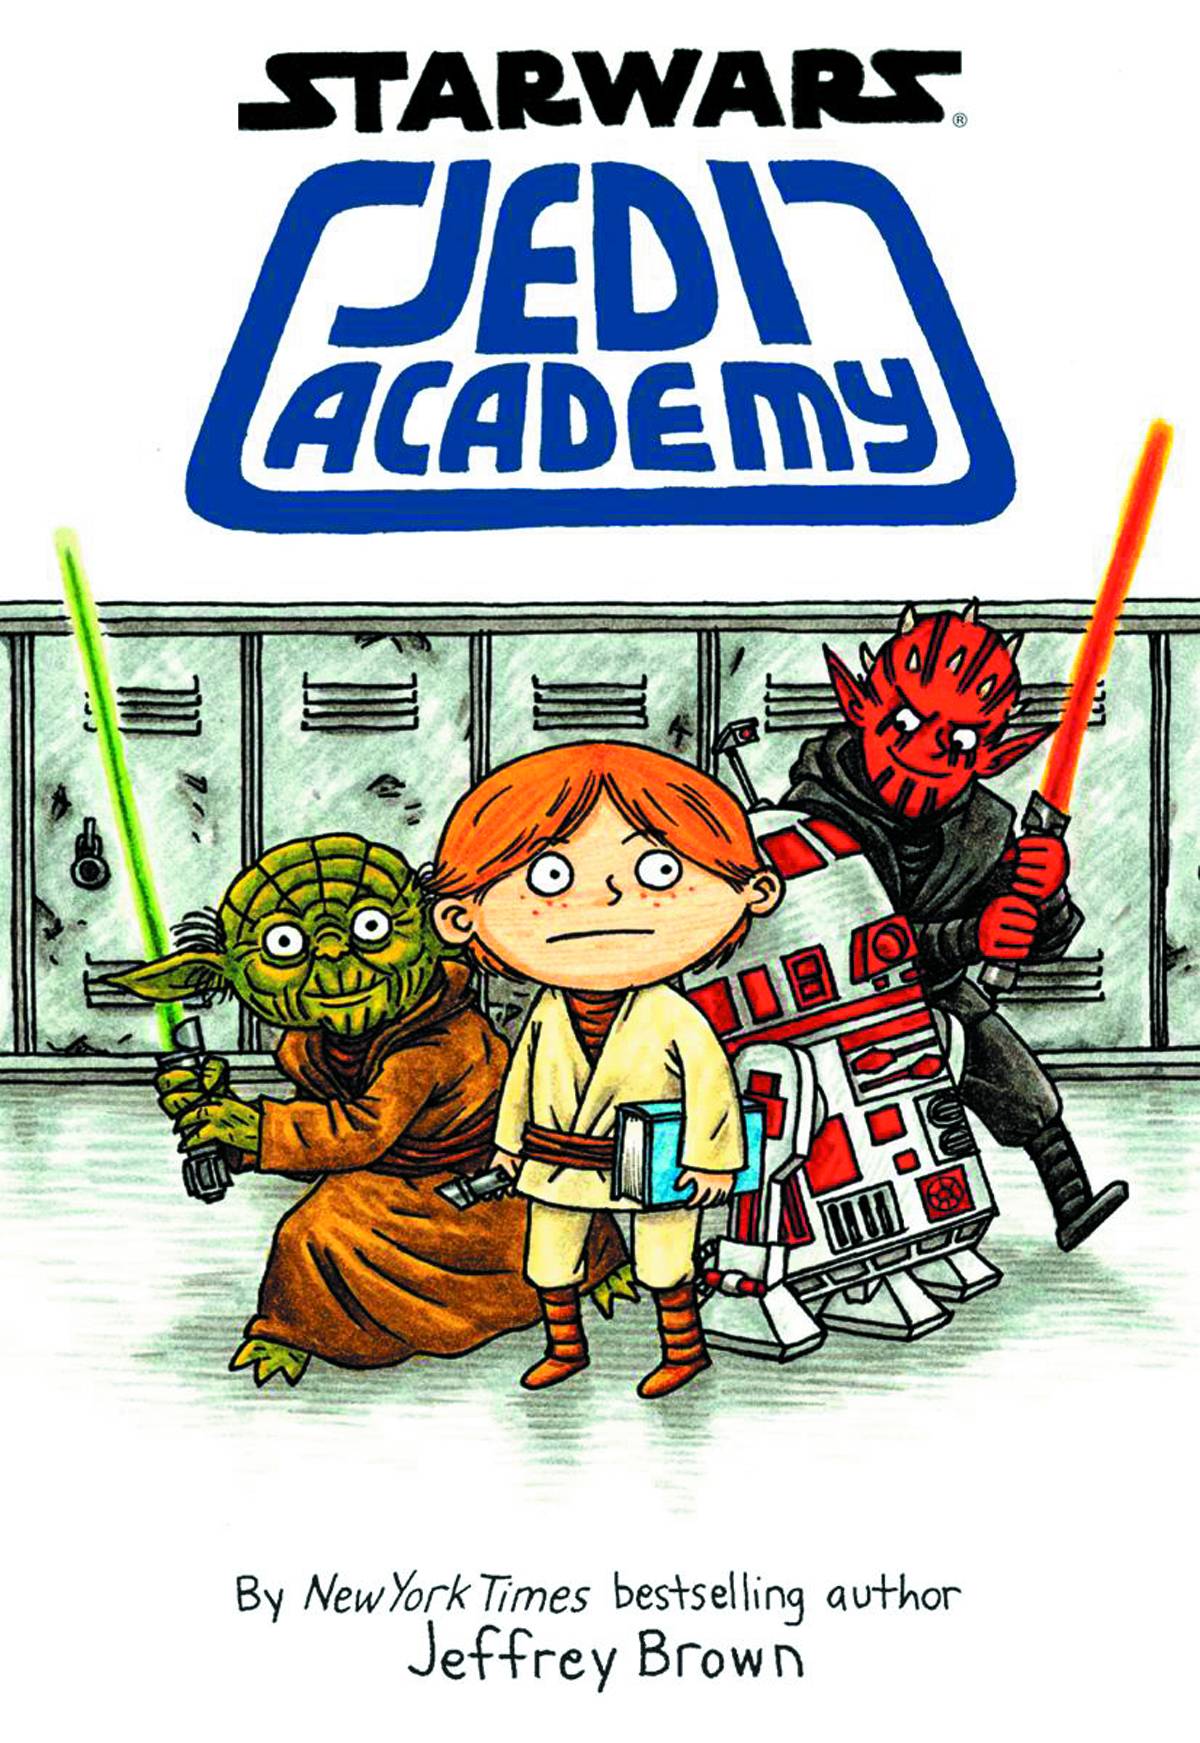 Star Wars Jedi Academy Hardcover Volume 1